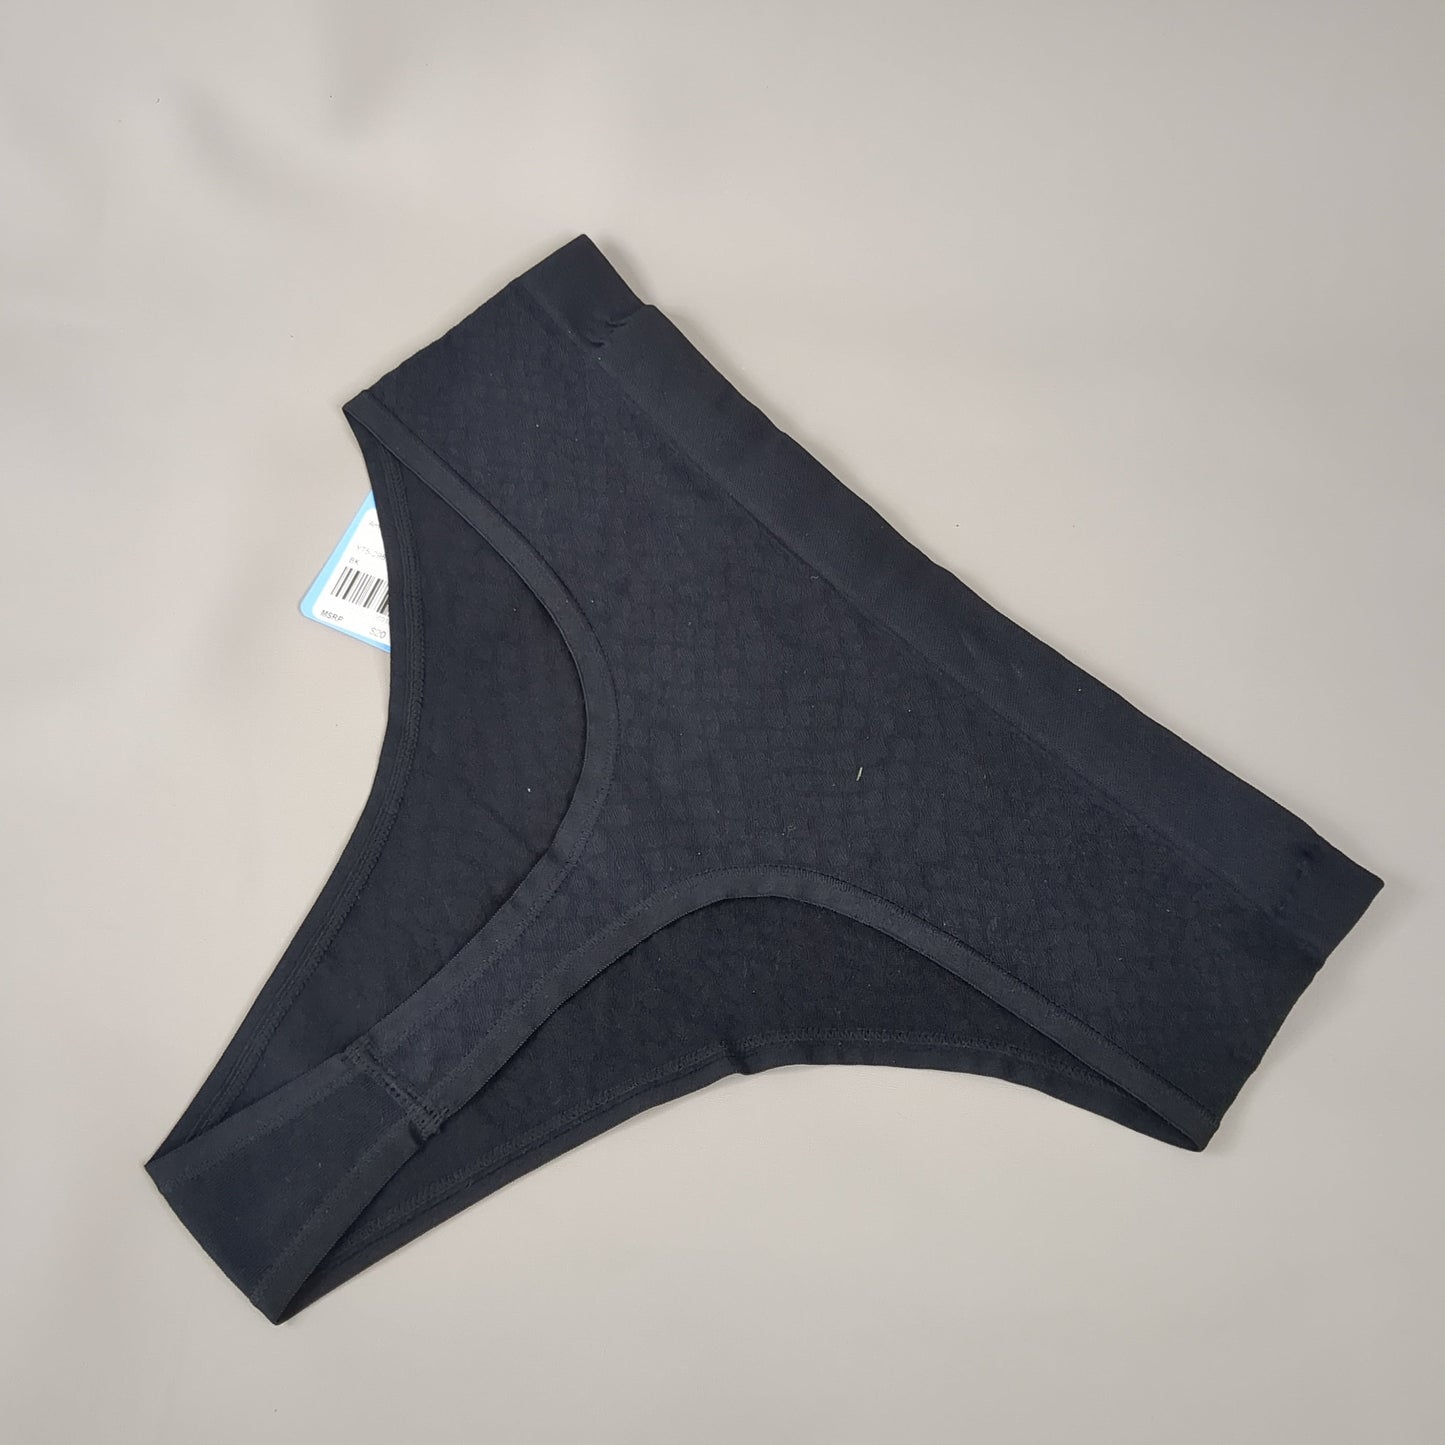 YUMMIE Amber Mid Waist Thong Women's Underwear Sz L/XL Black YT5-296 ( –  PayWut